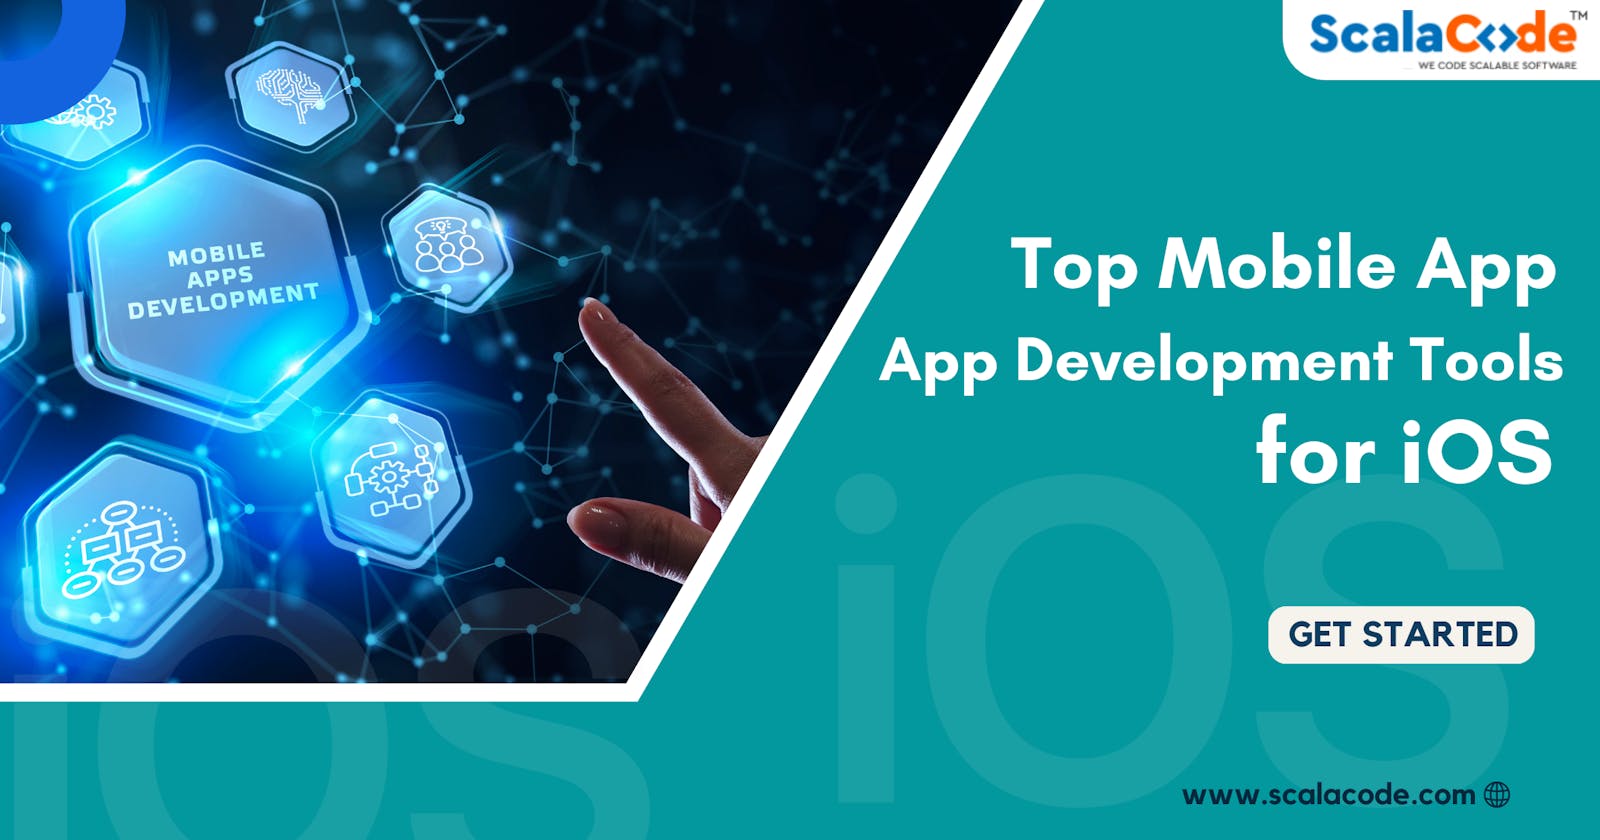 Top Mobile App Development Tools for iOS